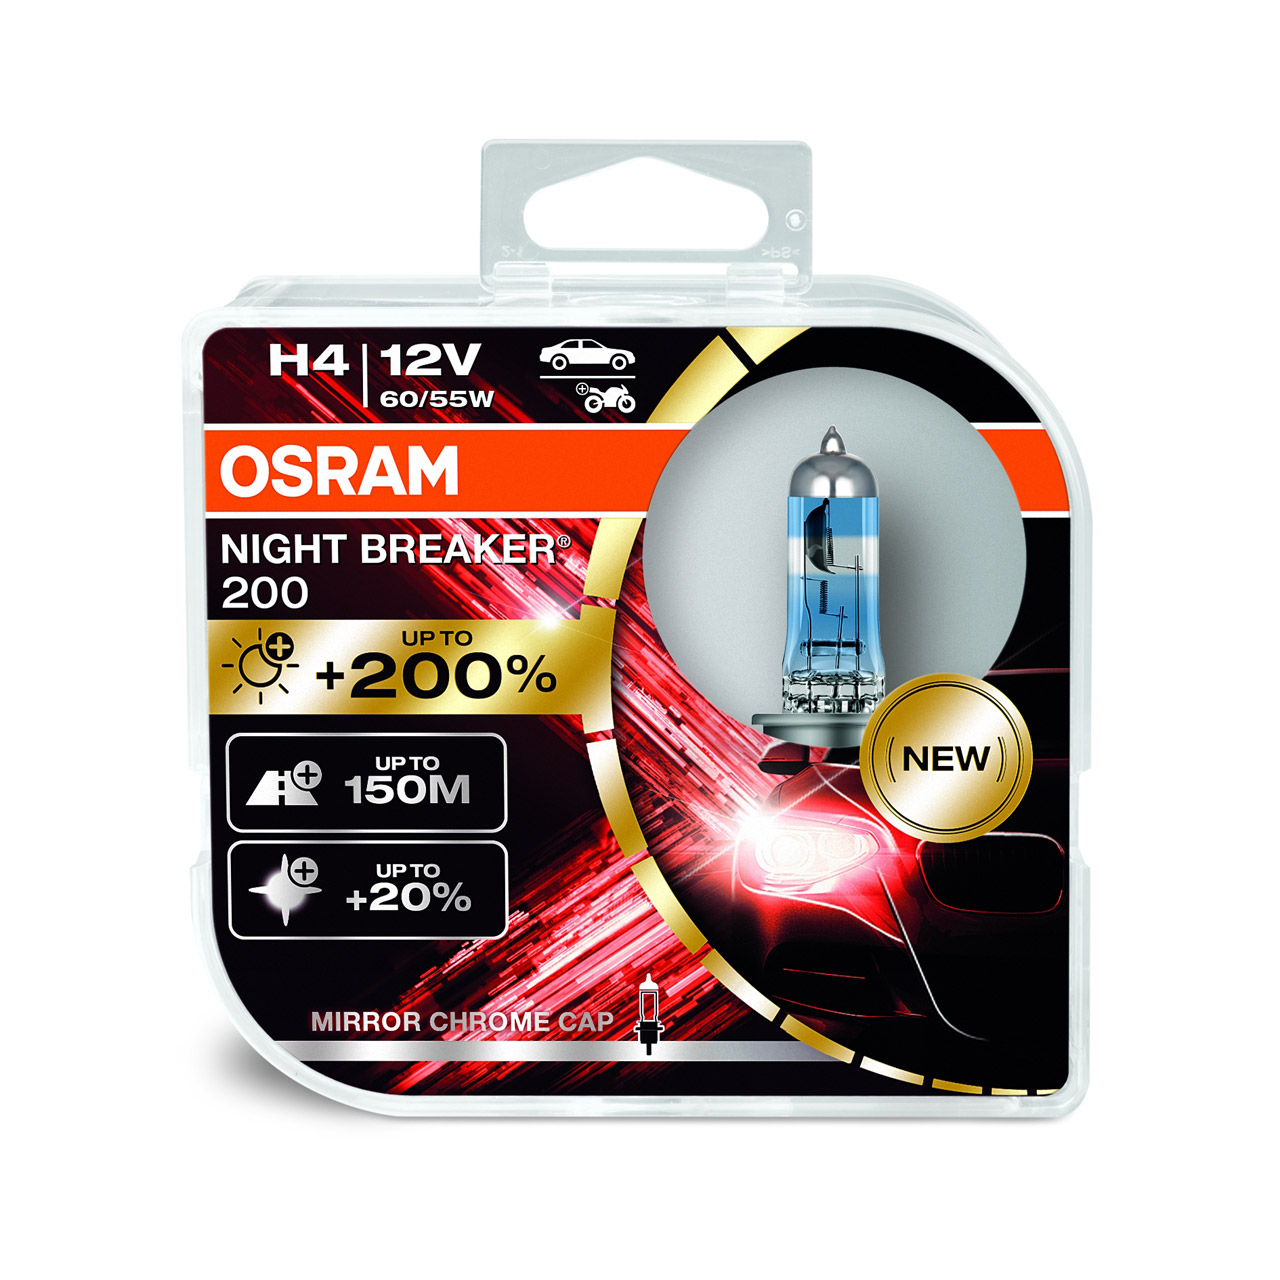 2x OSRAM Glühlampe H4 NIGHT BREAKER 200 12V 60/55W P43t +200% (Edition 2021)